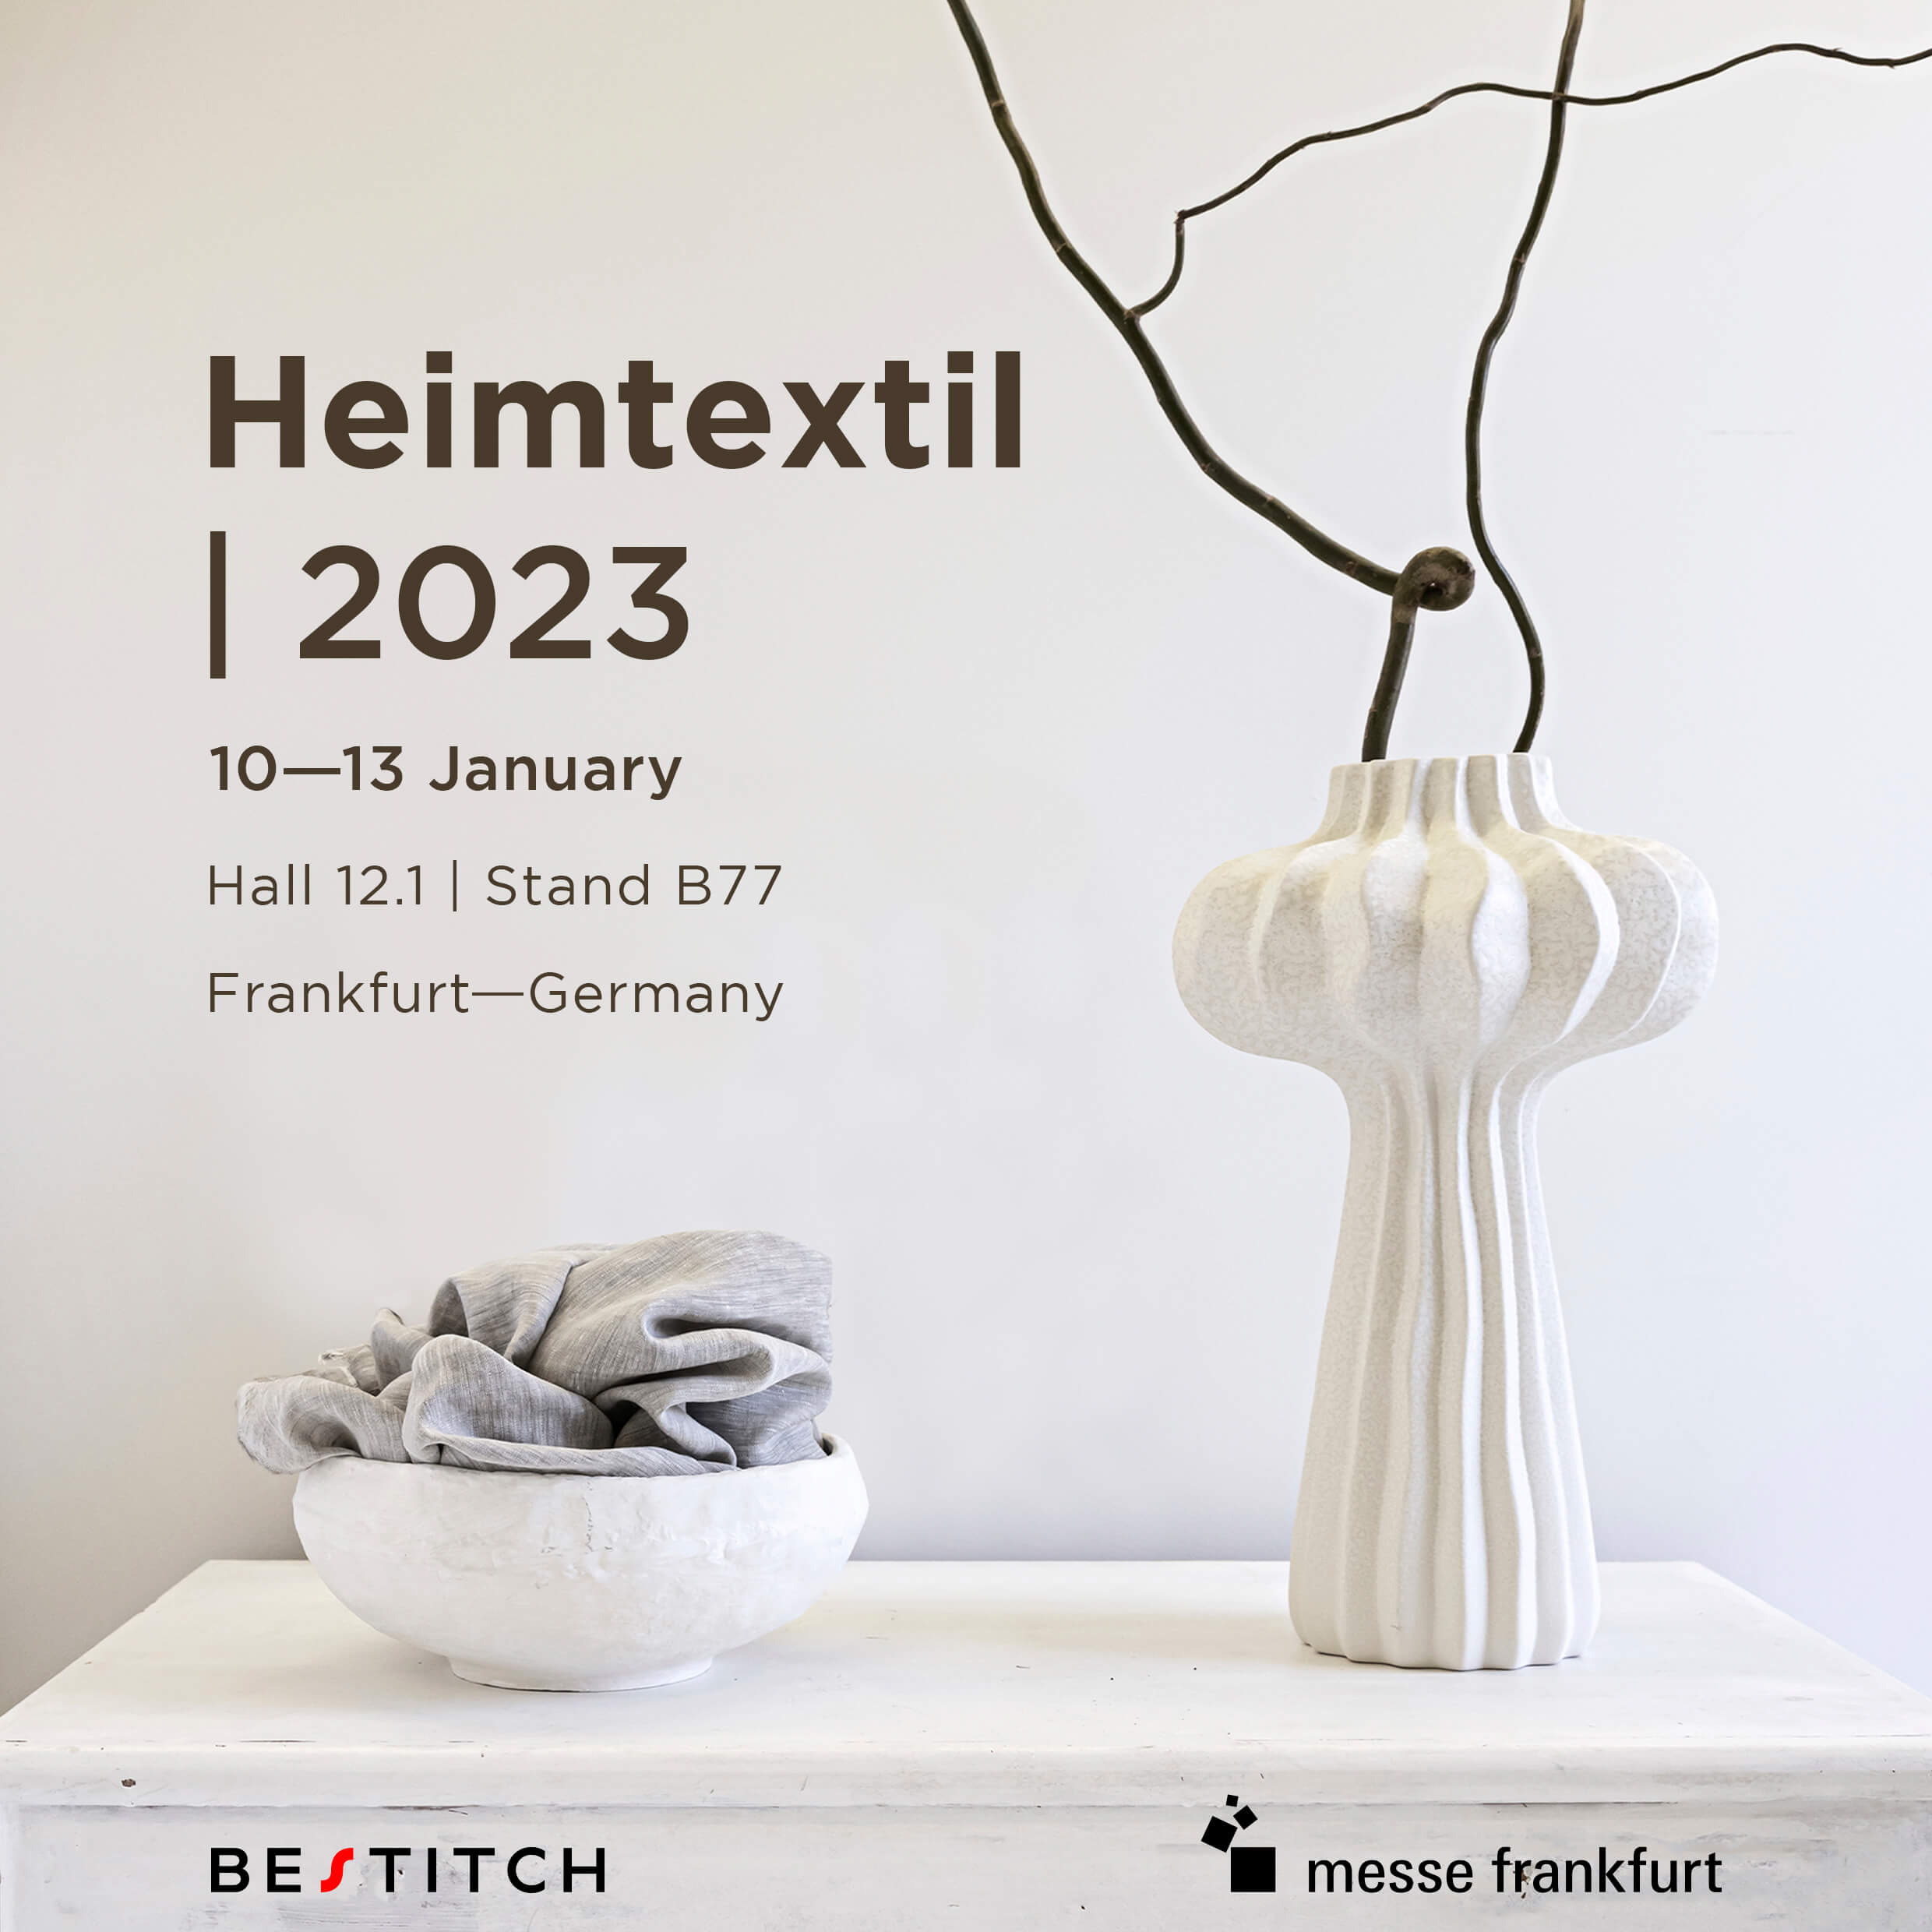 Convite Heimtextil 2023 no hall 12.1, stand B77.